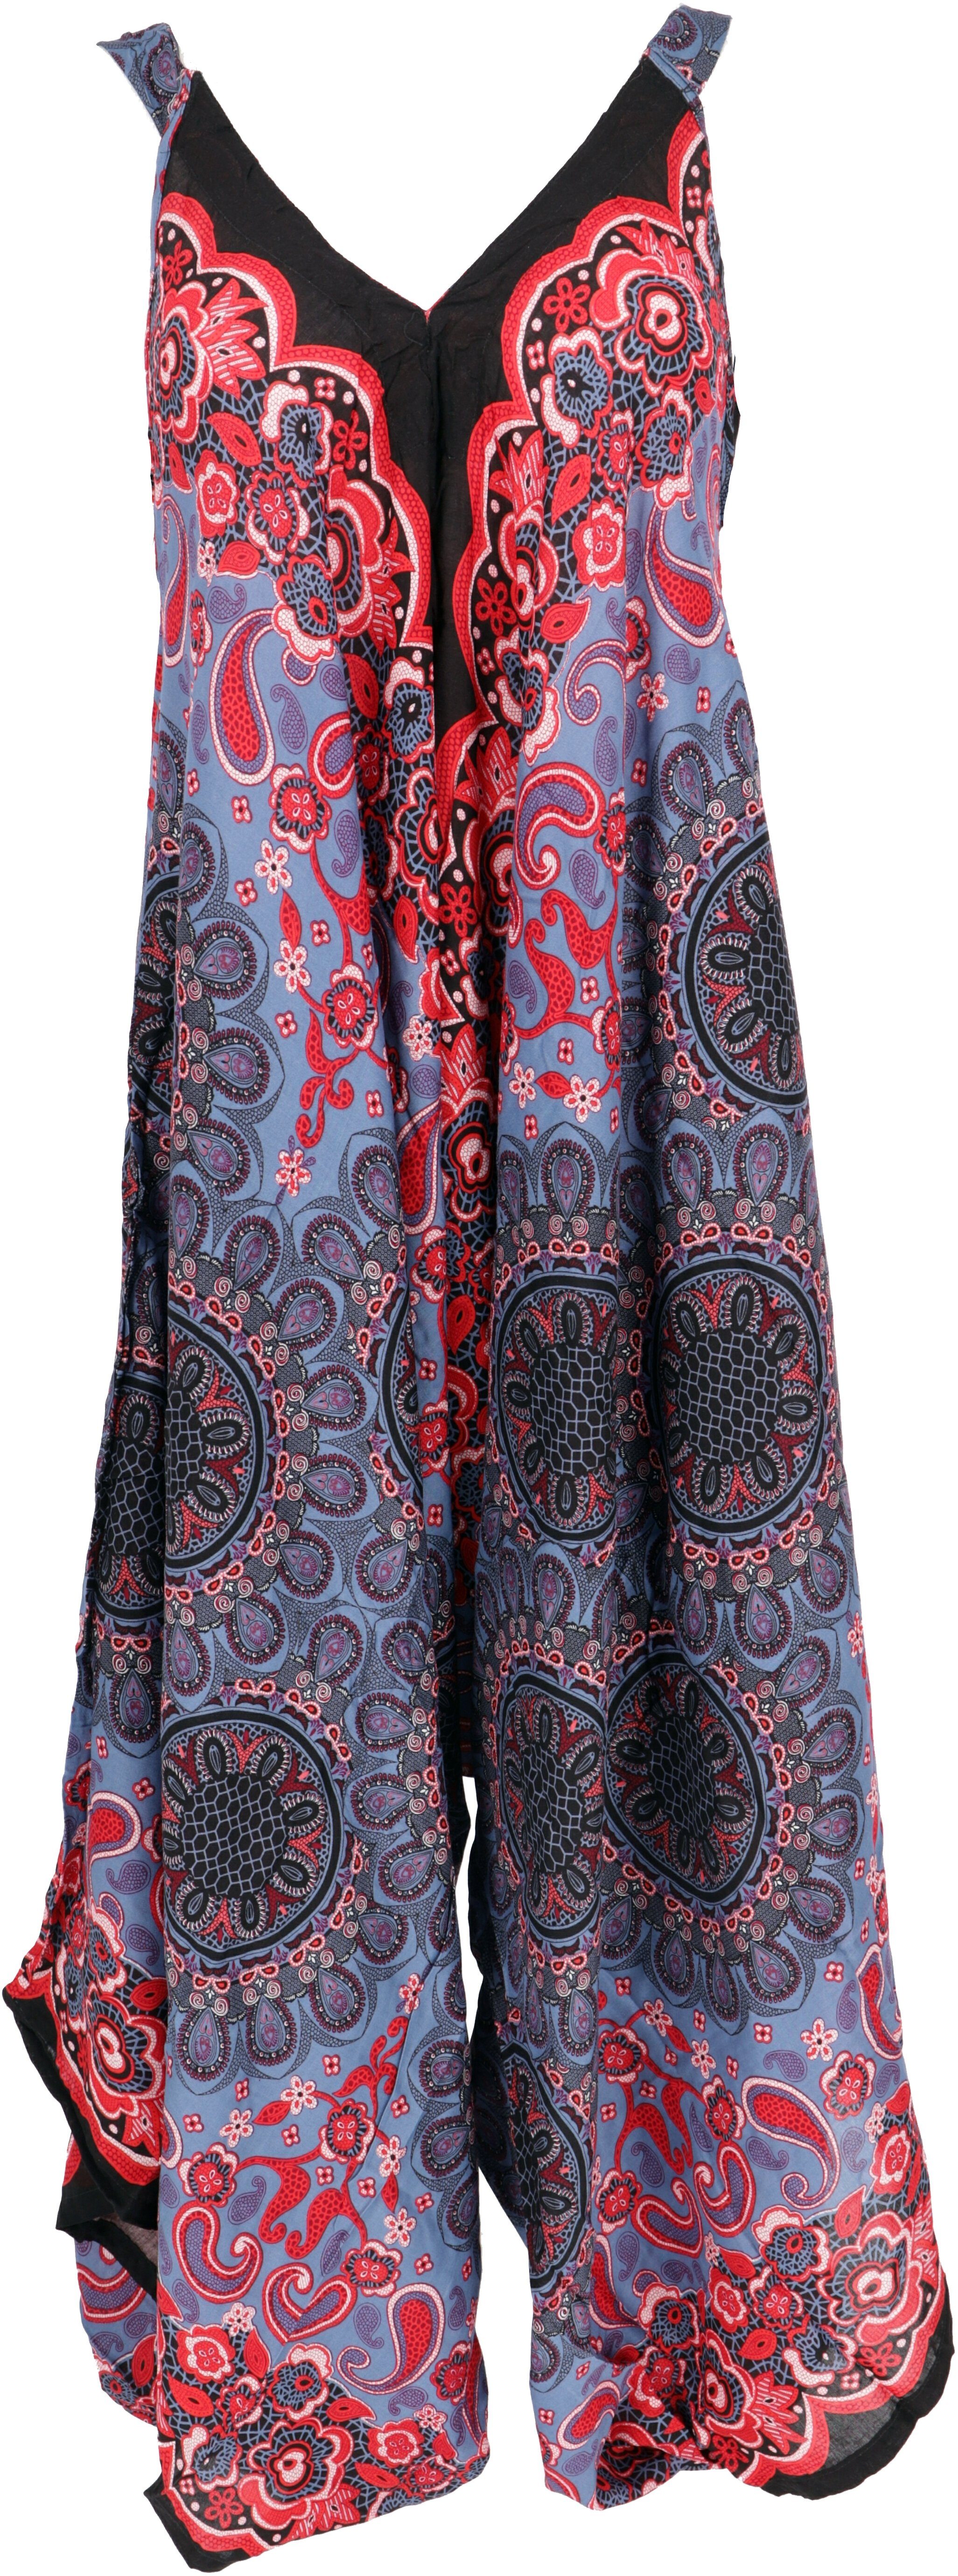 Guru-Shop Relaxhose Boho Jumpsuit, Mandala Sommer Overall, oversize.. alternative Bekleidung rot/schwarz